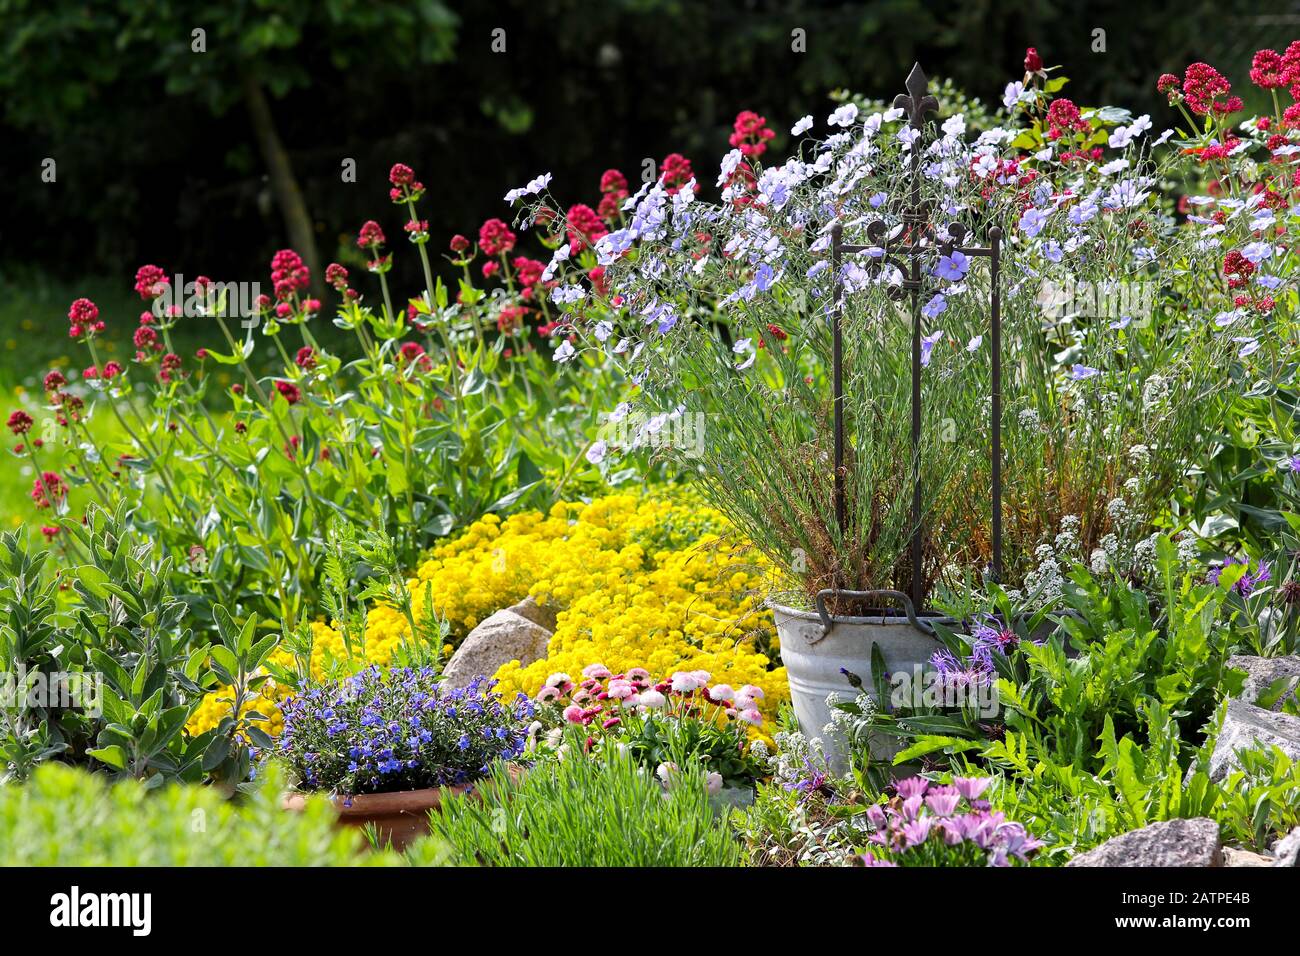 Landscape gardening, gardening Stock Photo